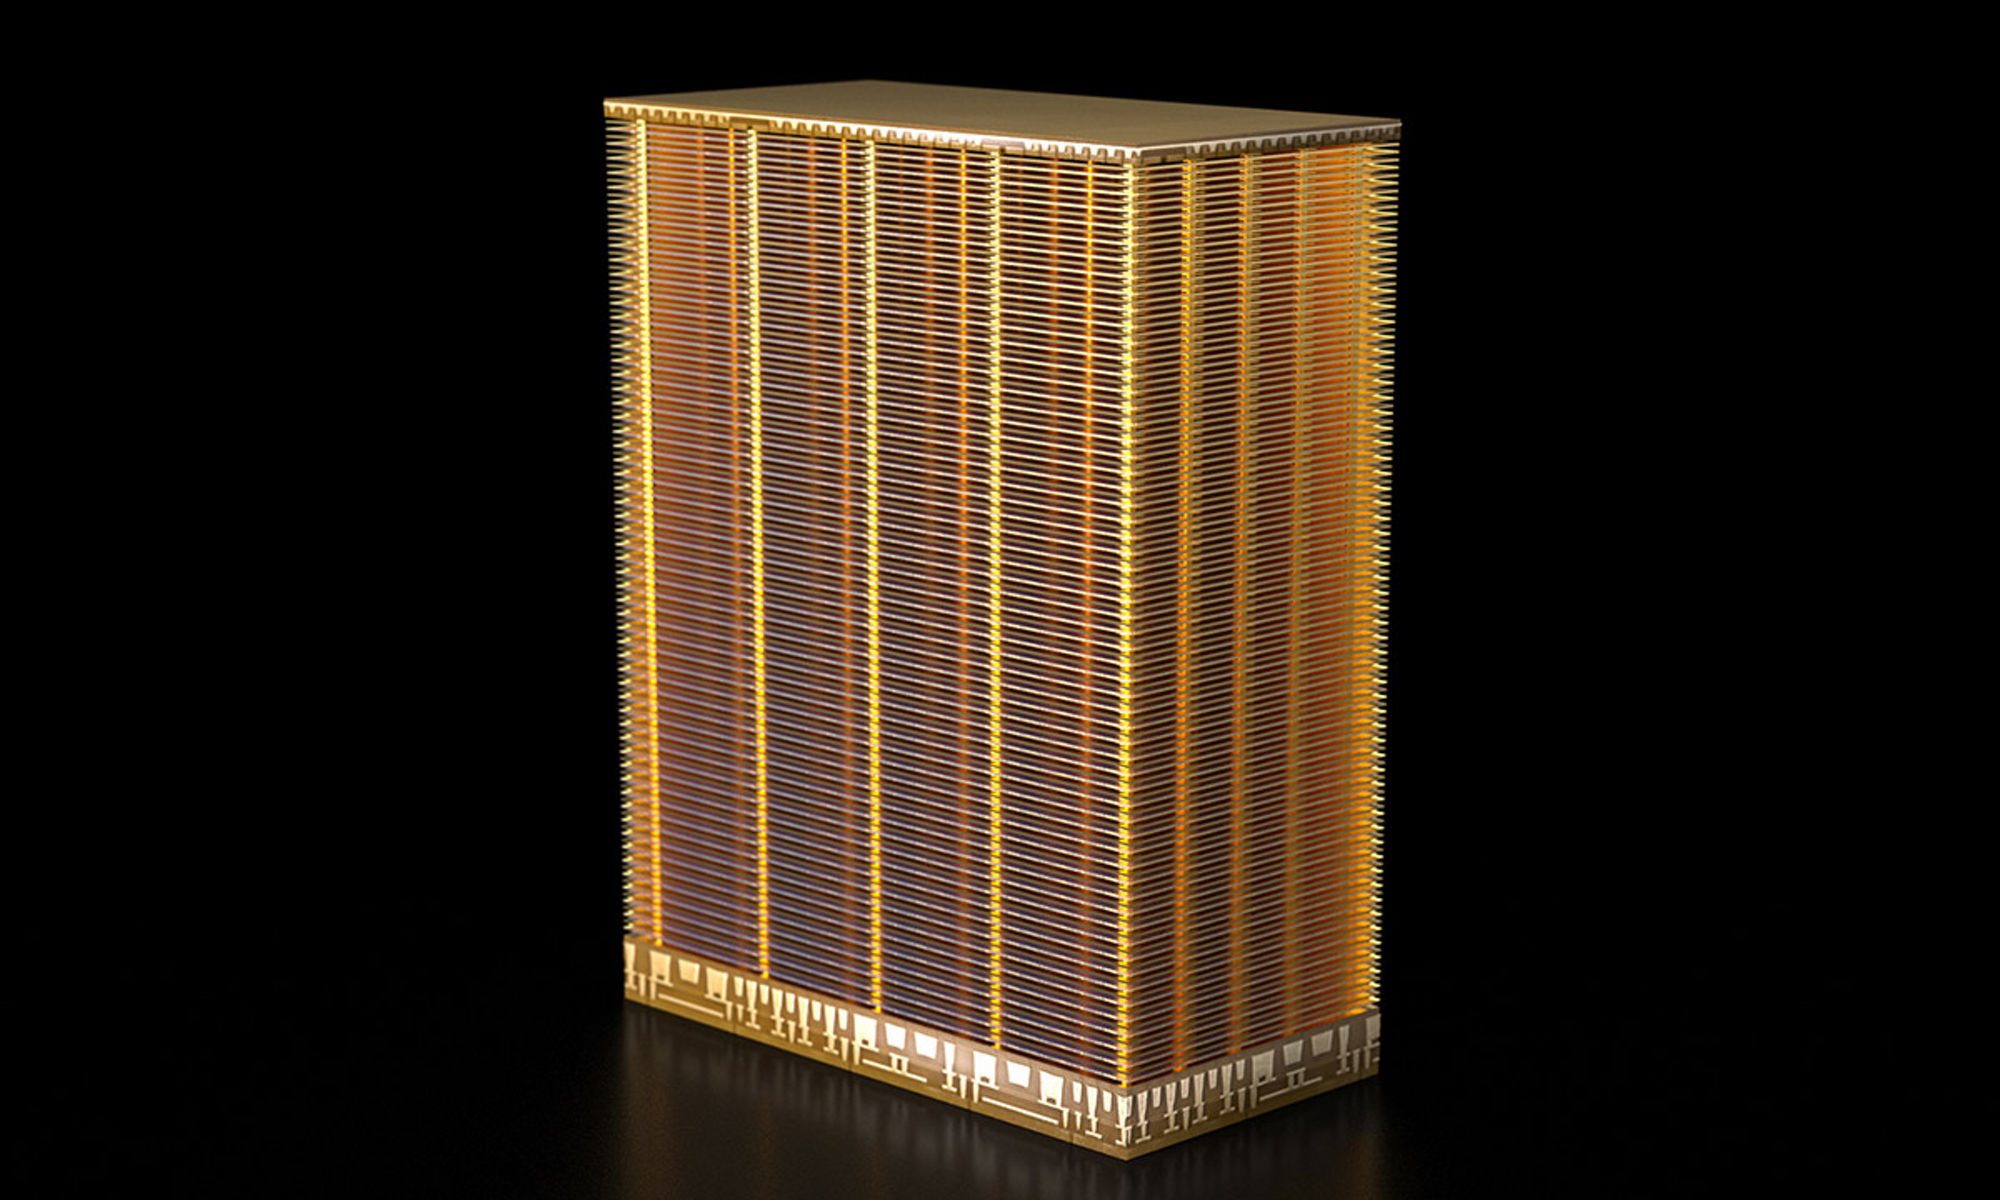 Micron 232-layer 3D NAND